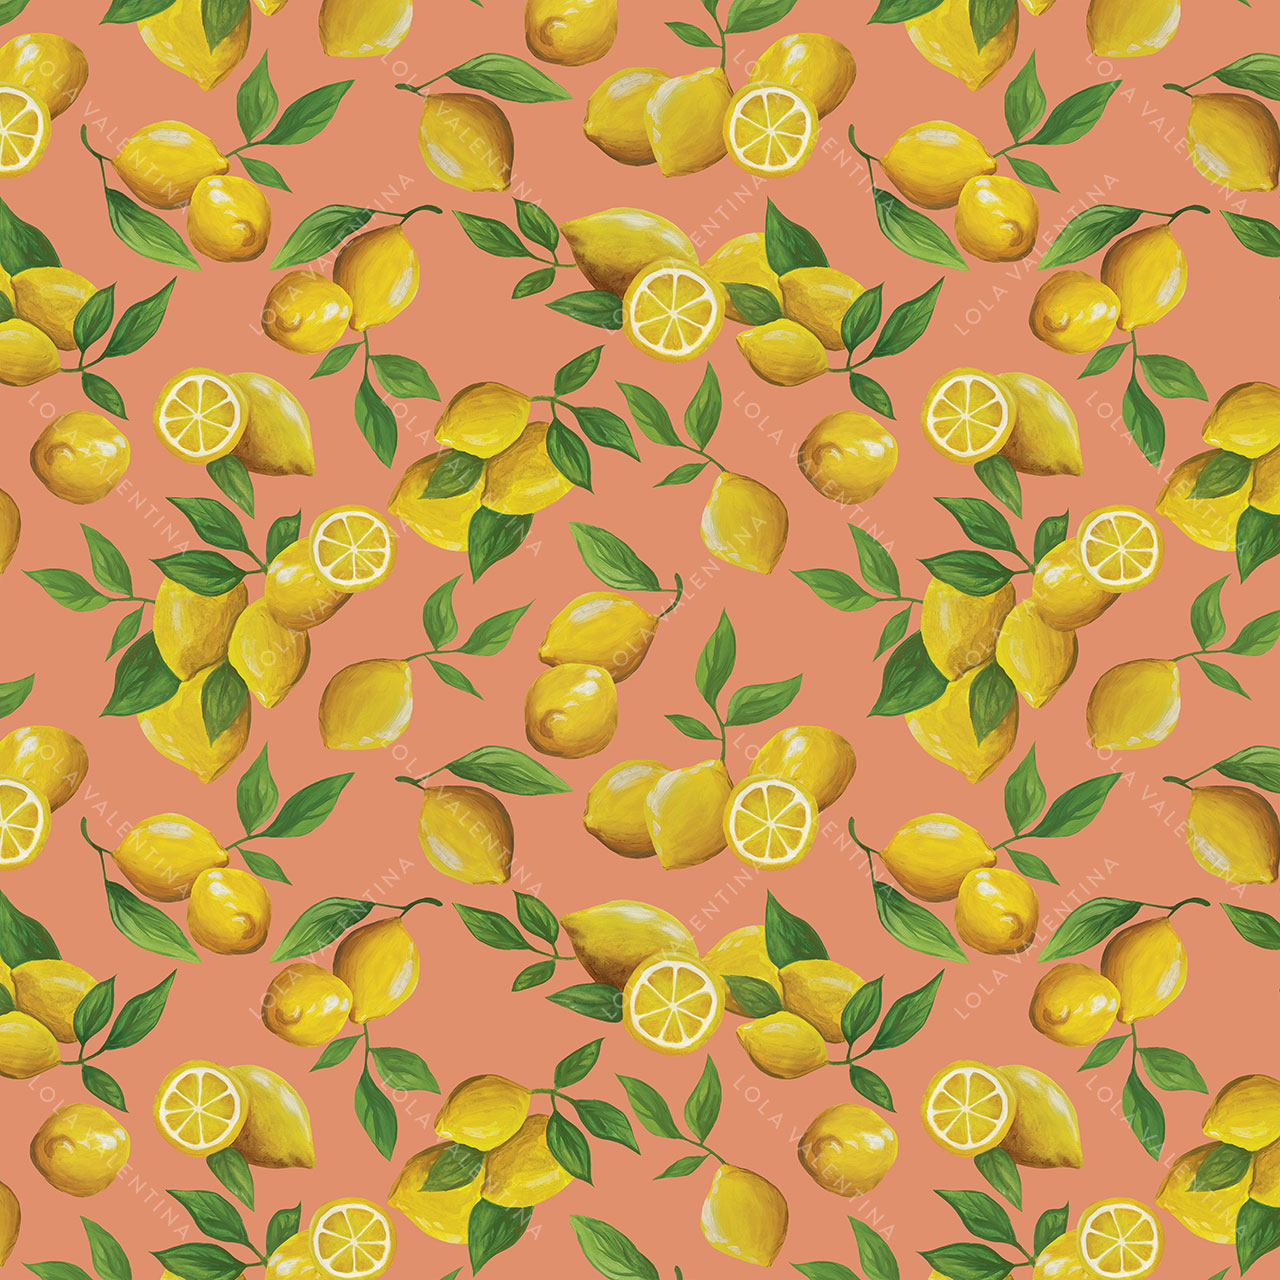 Lemons-Leaves-Apricot-Orange-Fruits-Citrus-Pattern